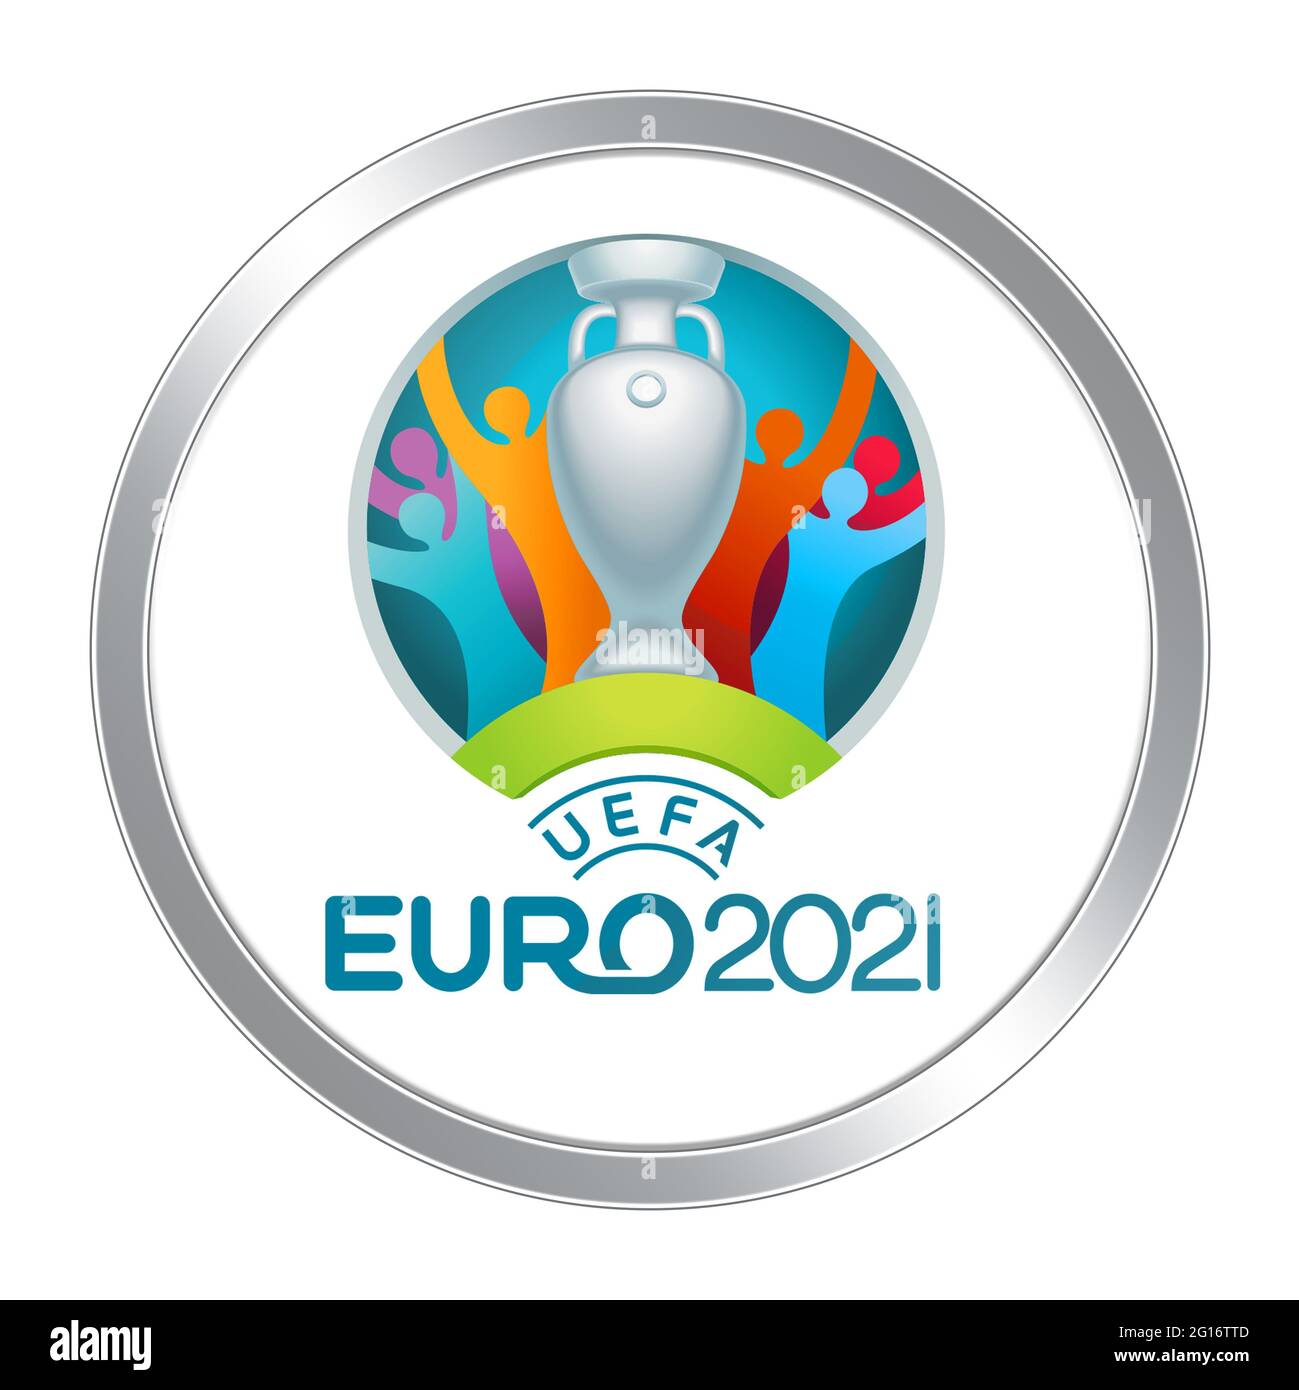 UEFA EURO 2020 2021 logo Stock Photo